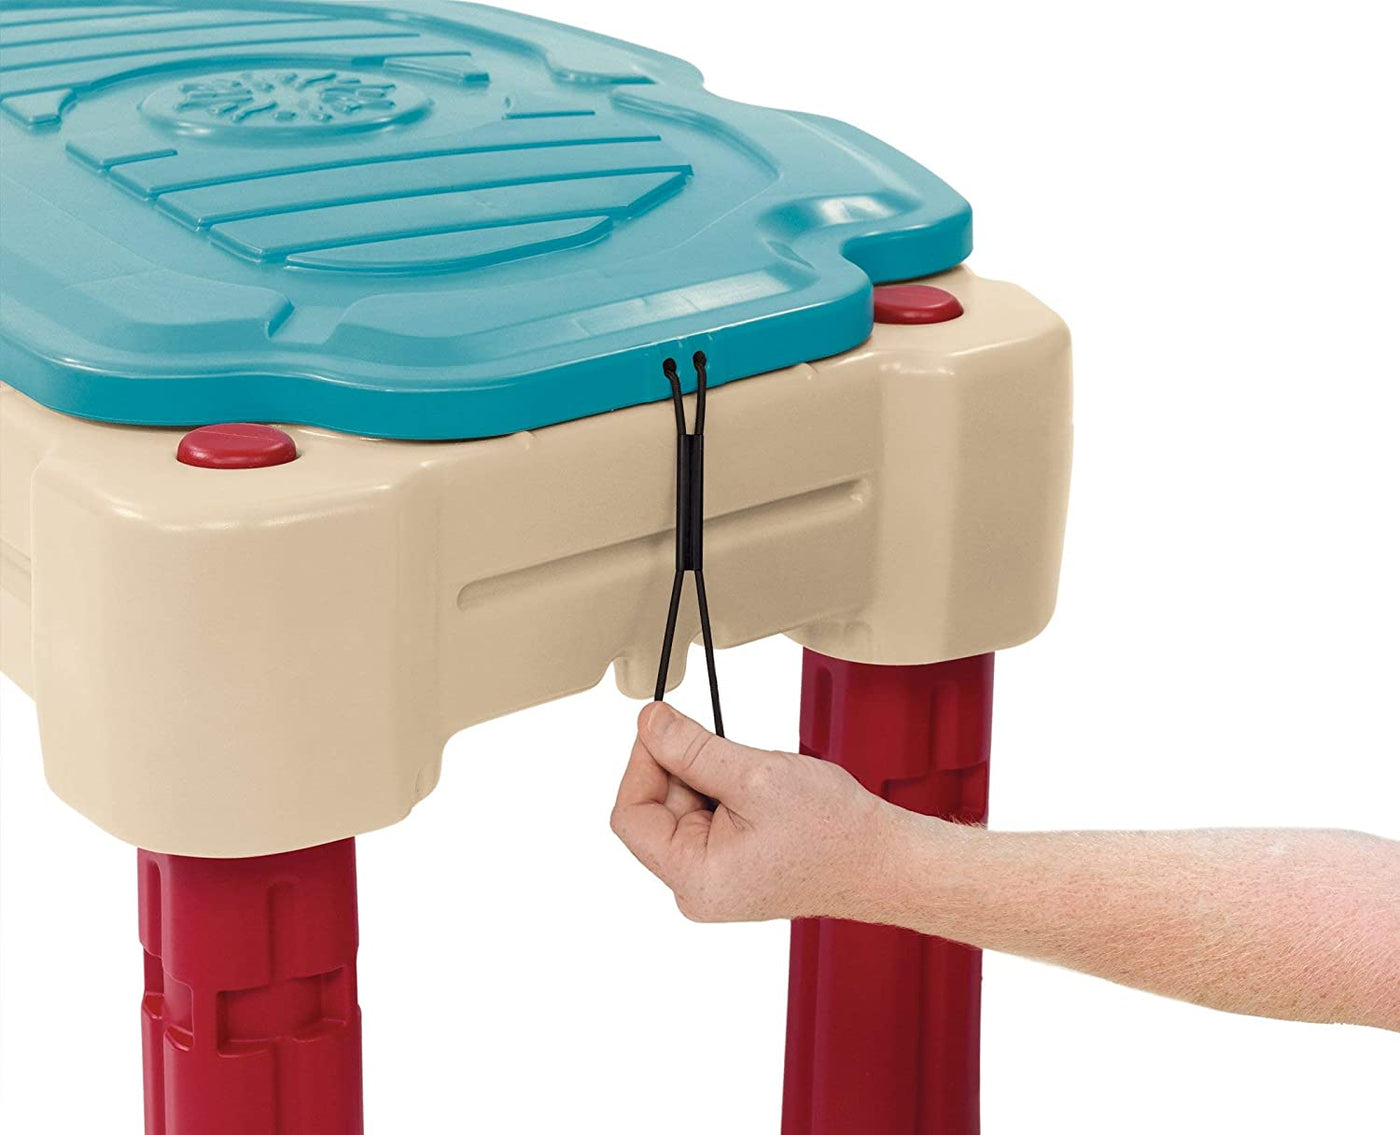 Adjustable Sand & Water Table | STEP2